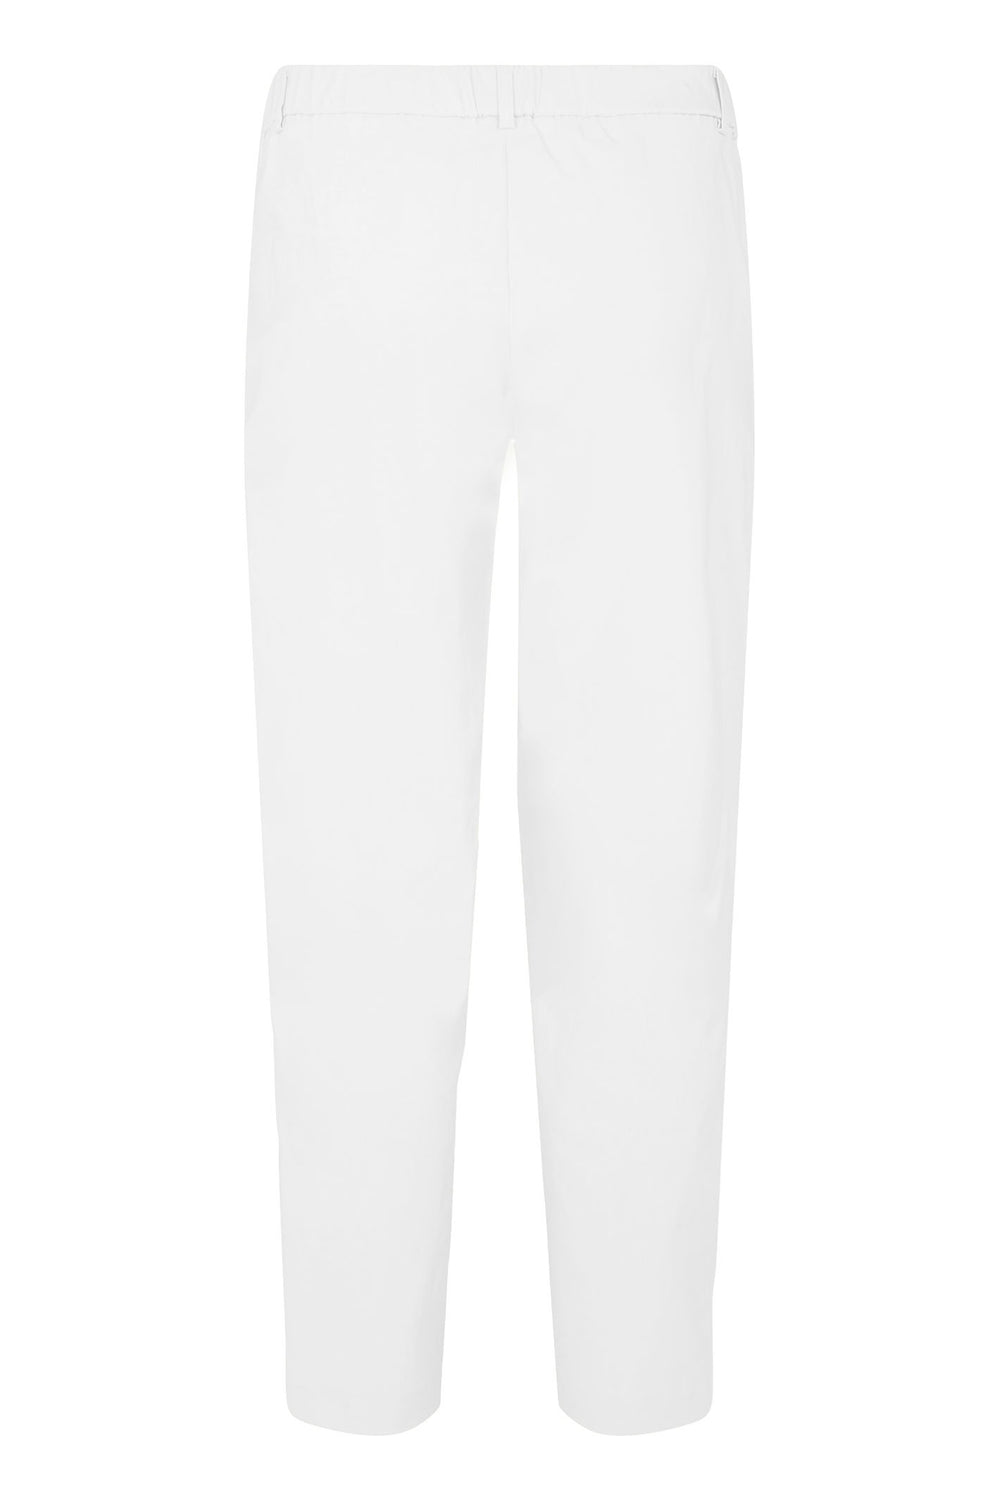 Robell 51409-05499-10 Sophia White Pull-On 68cm Trousers - Olivia Grace Fashion